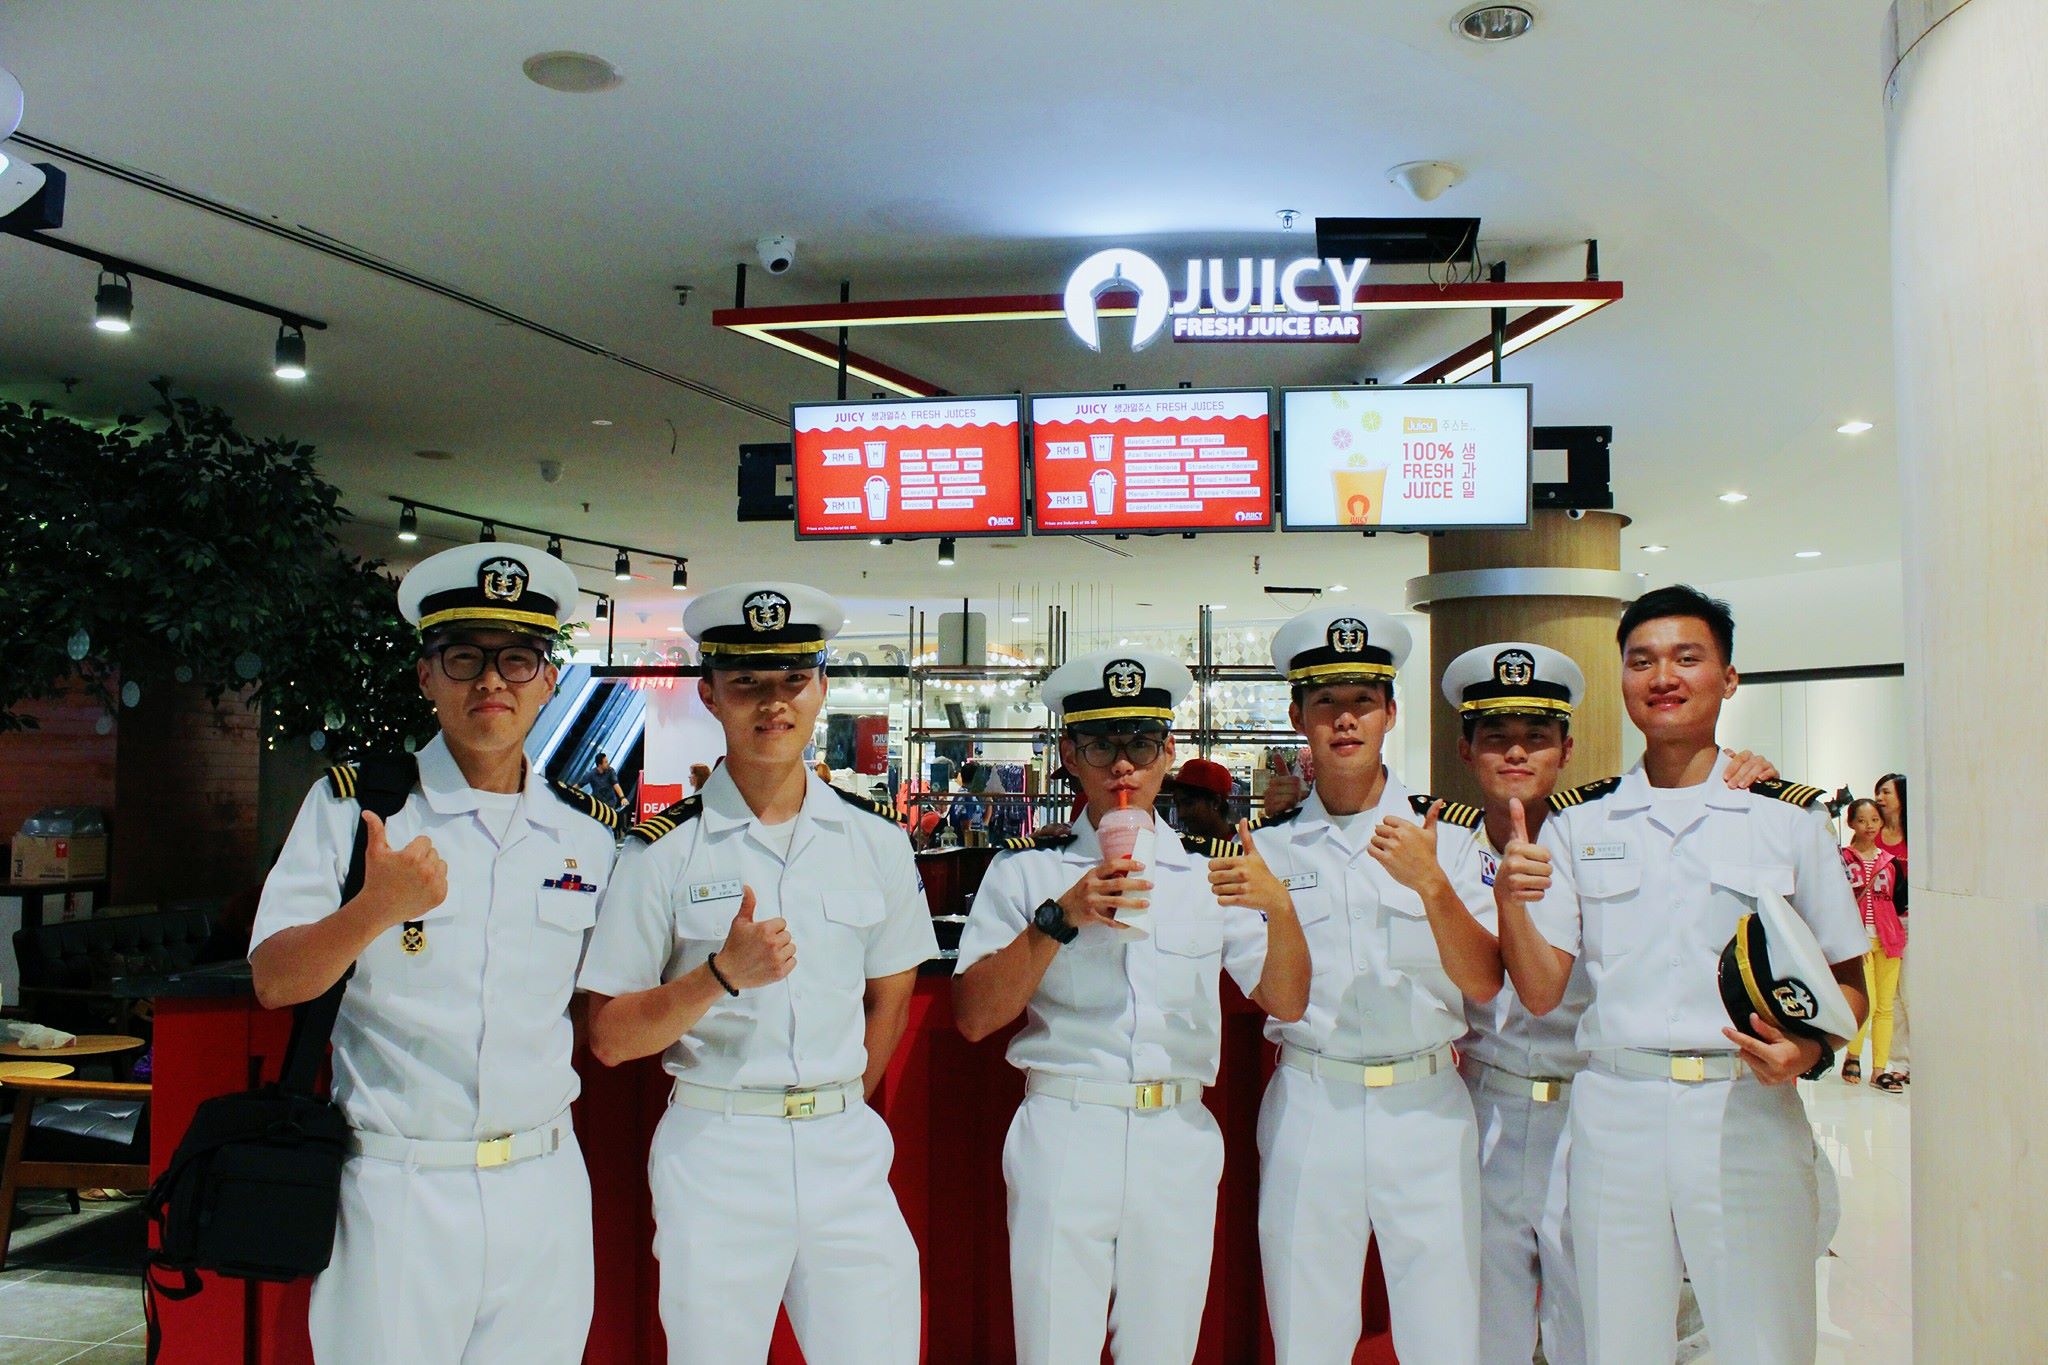 JUICY-Fresh-Juice-Bar-store-example02-Malaysia.jpg